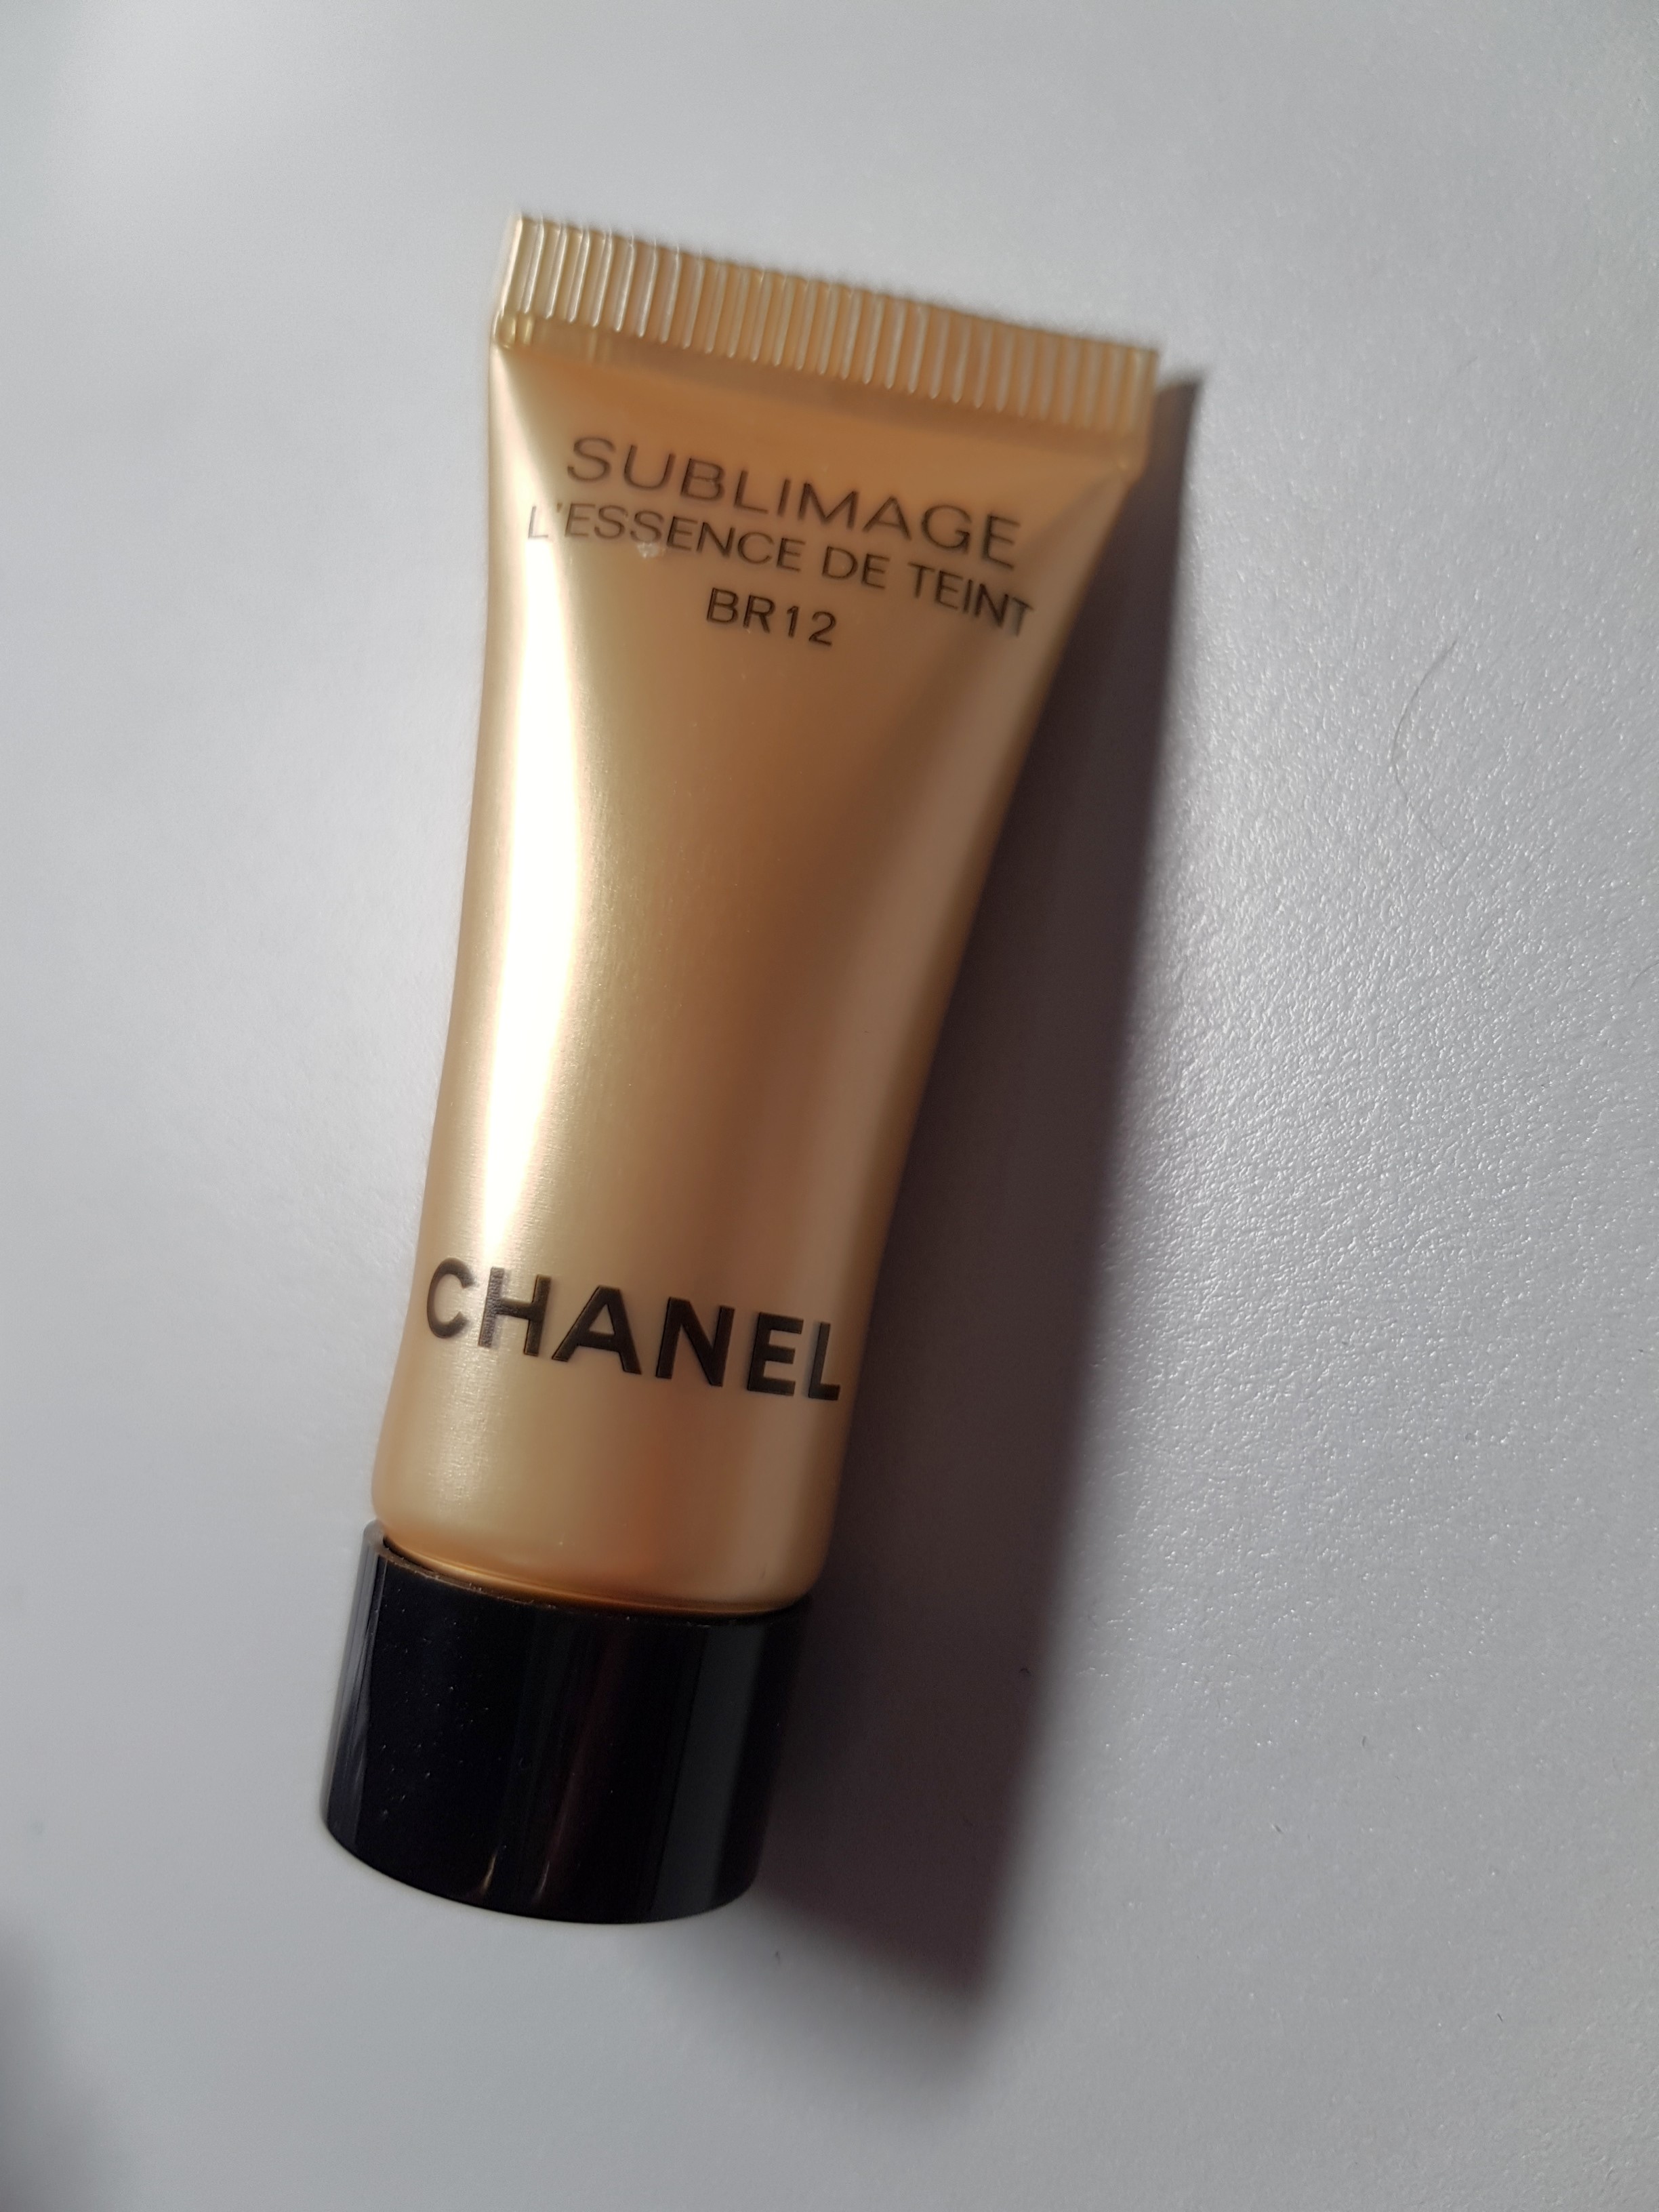 Chanel Sublimage L'essence De Teint BR 12, Beauty & Personal Care, Face,  Makeup on Carousell